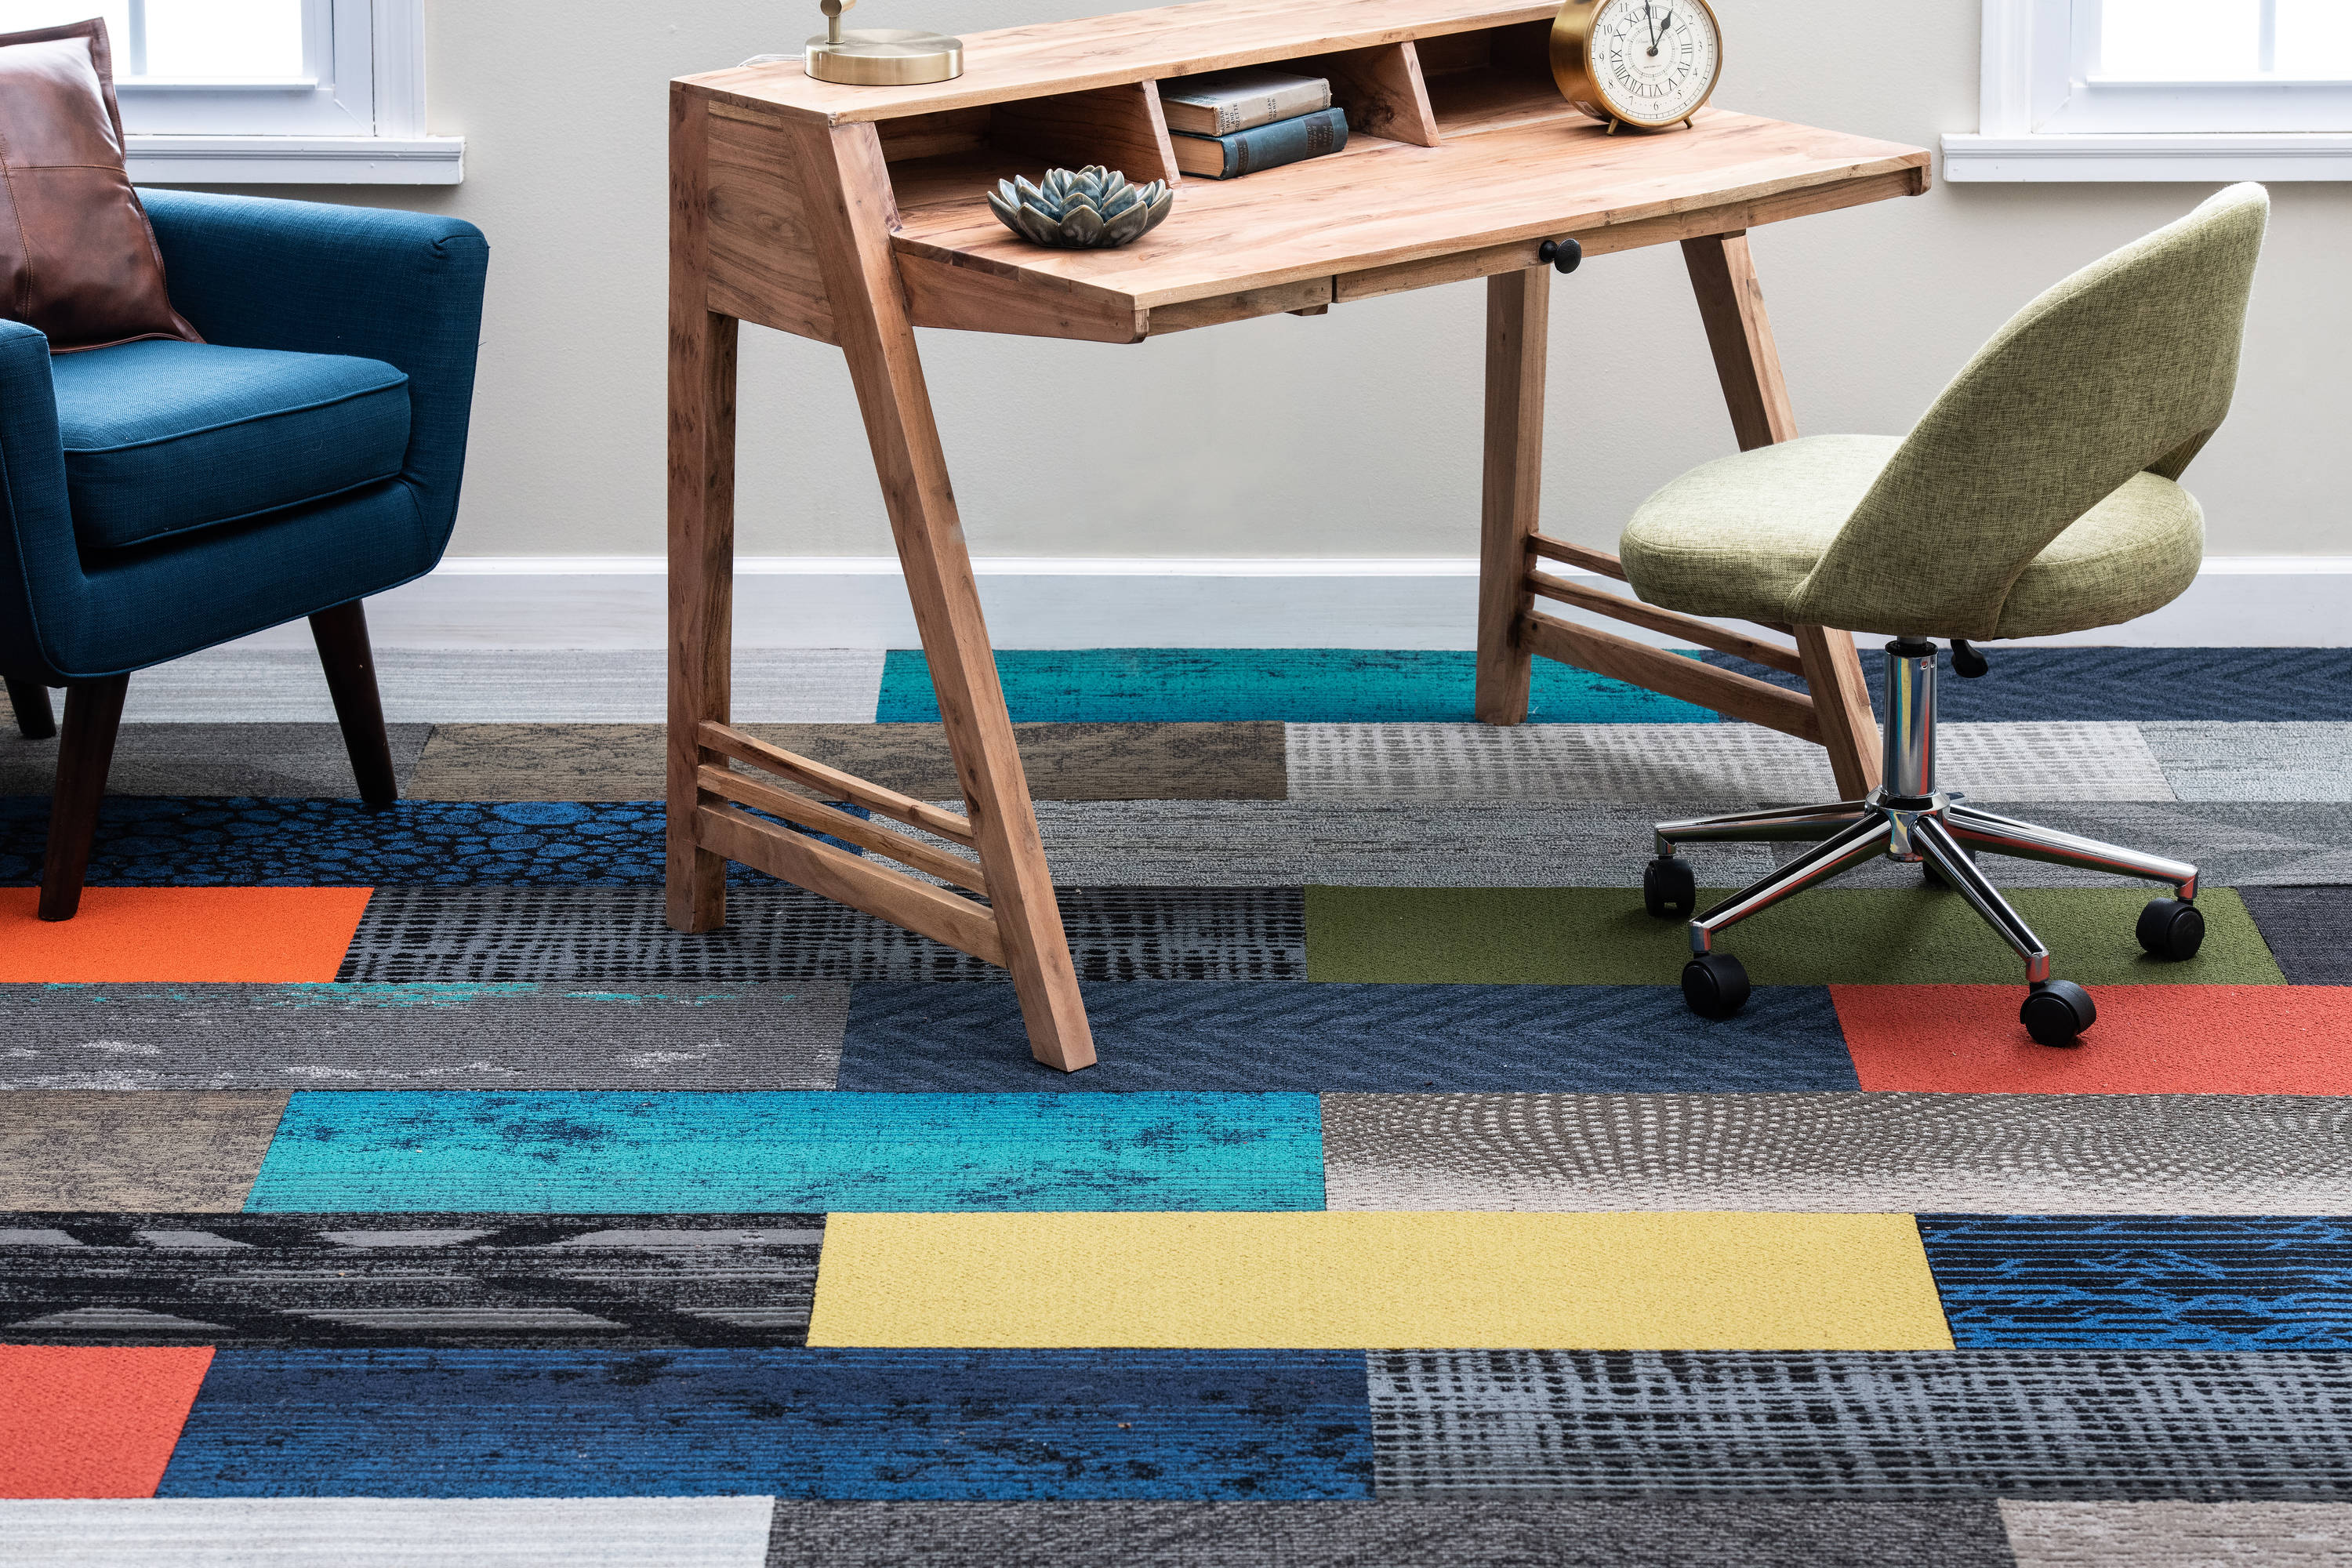 Sprayable carpet adhesive for carpet tiles - PENOSIL Global